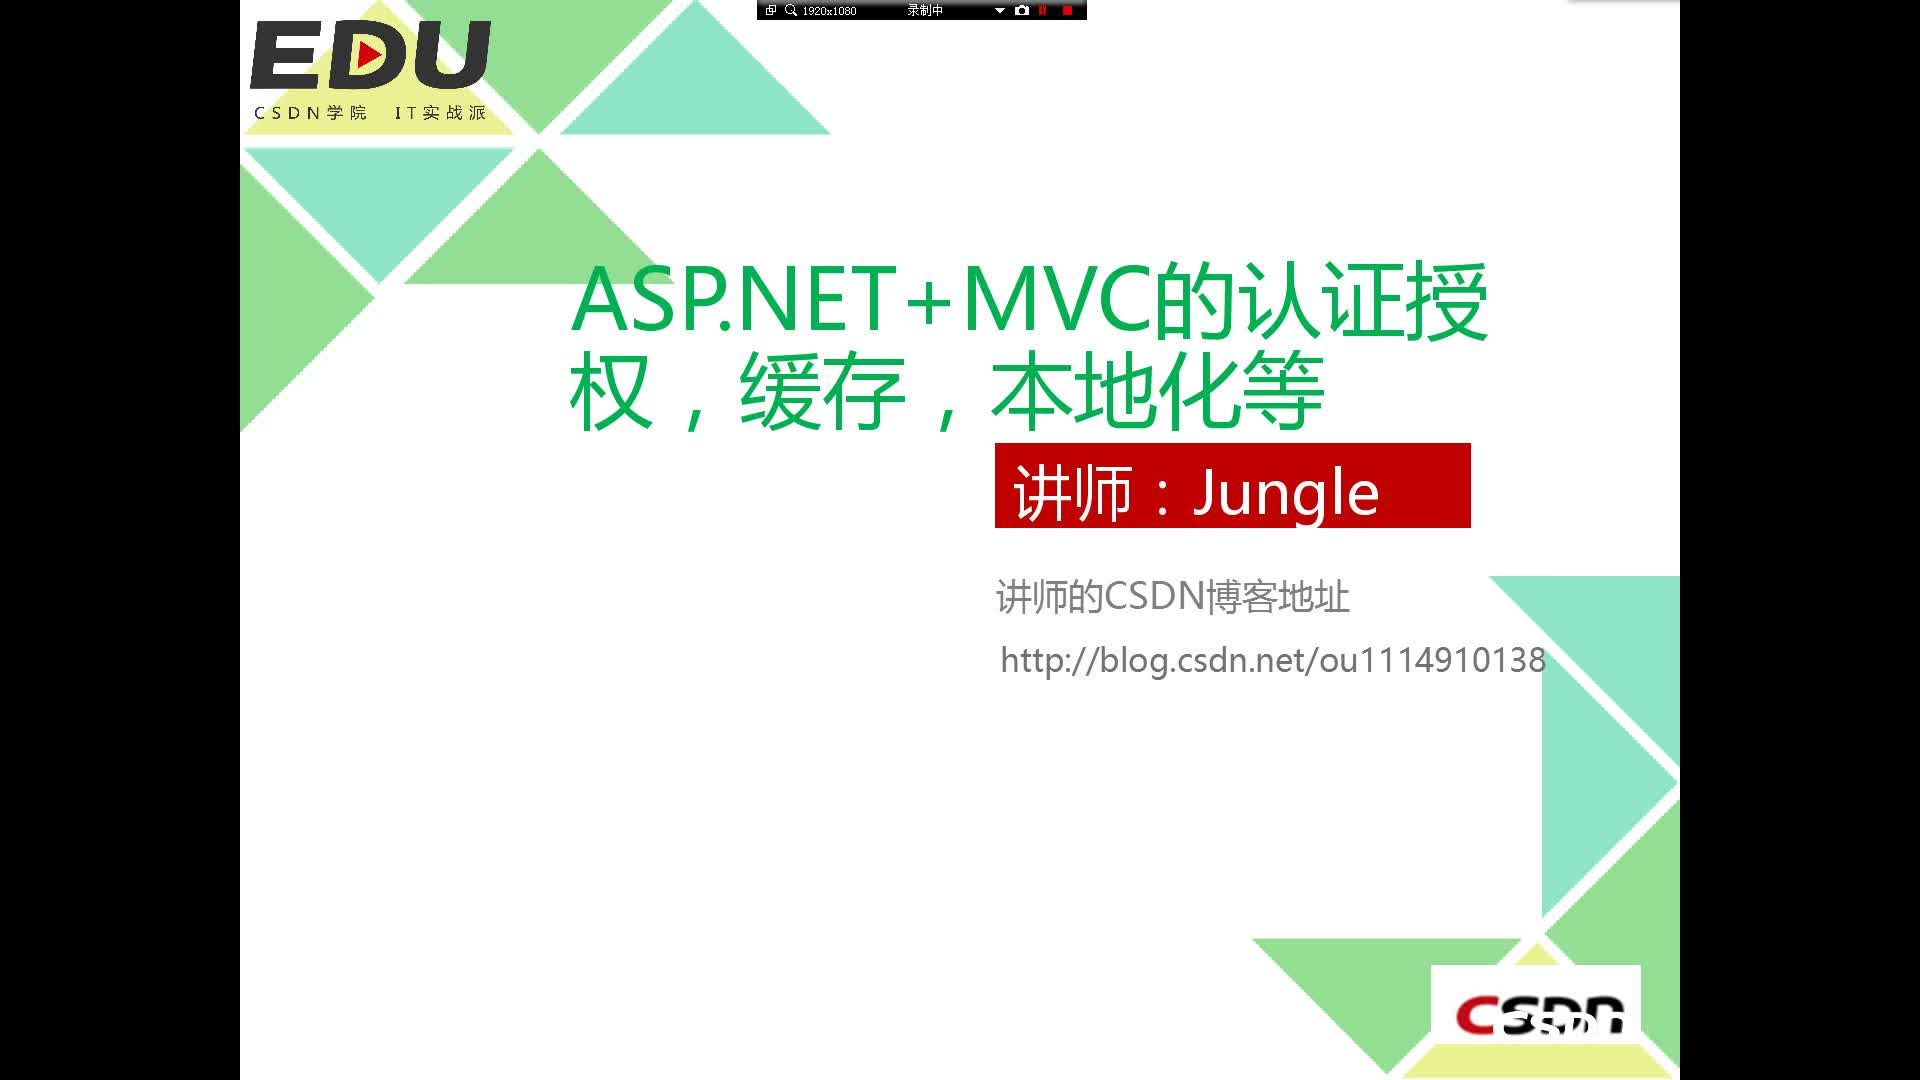 ASP.NET+MVC的认证授权，缓存，本地化等